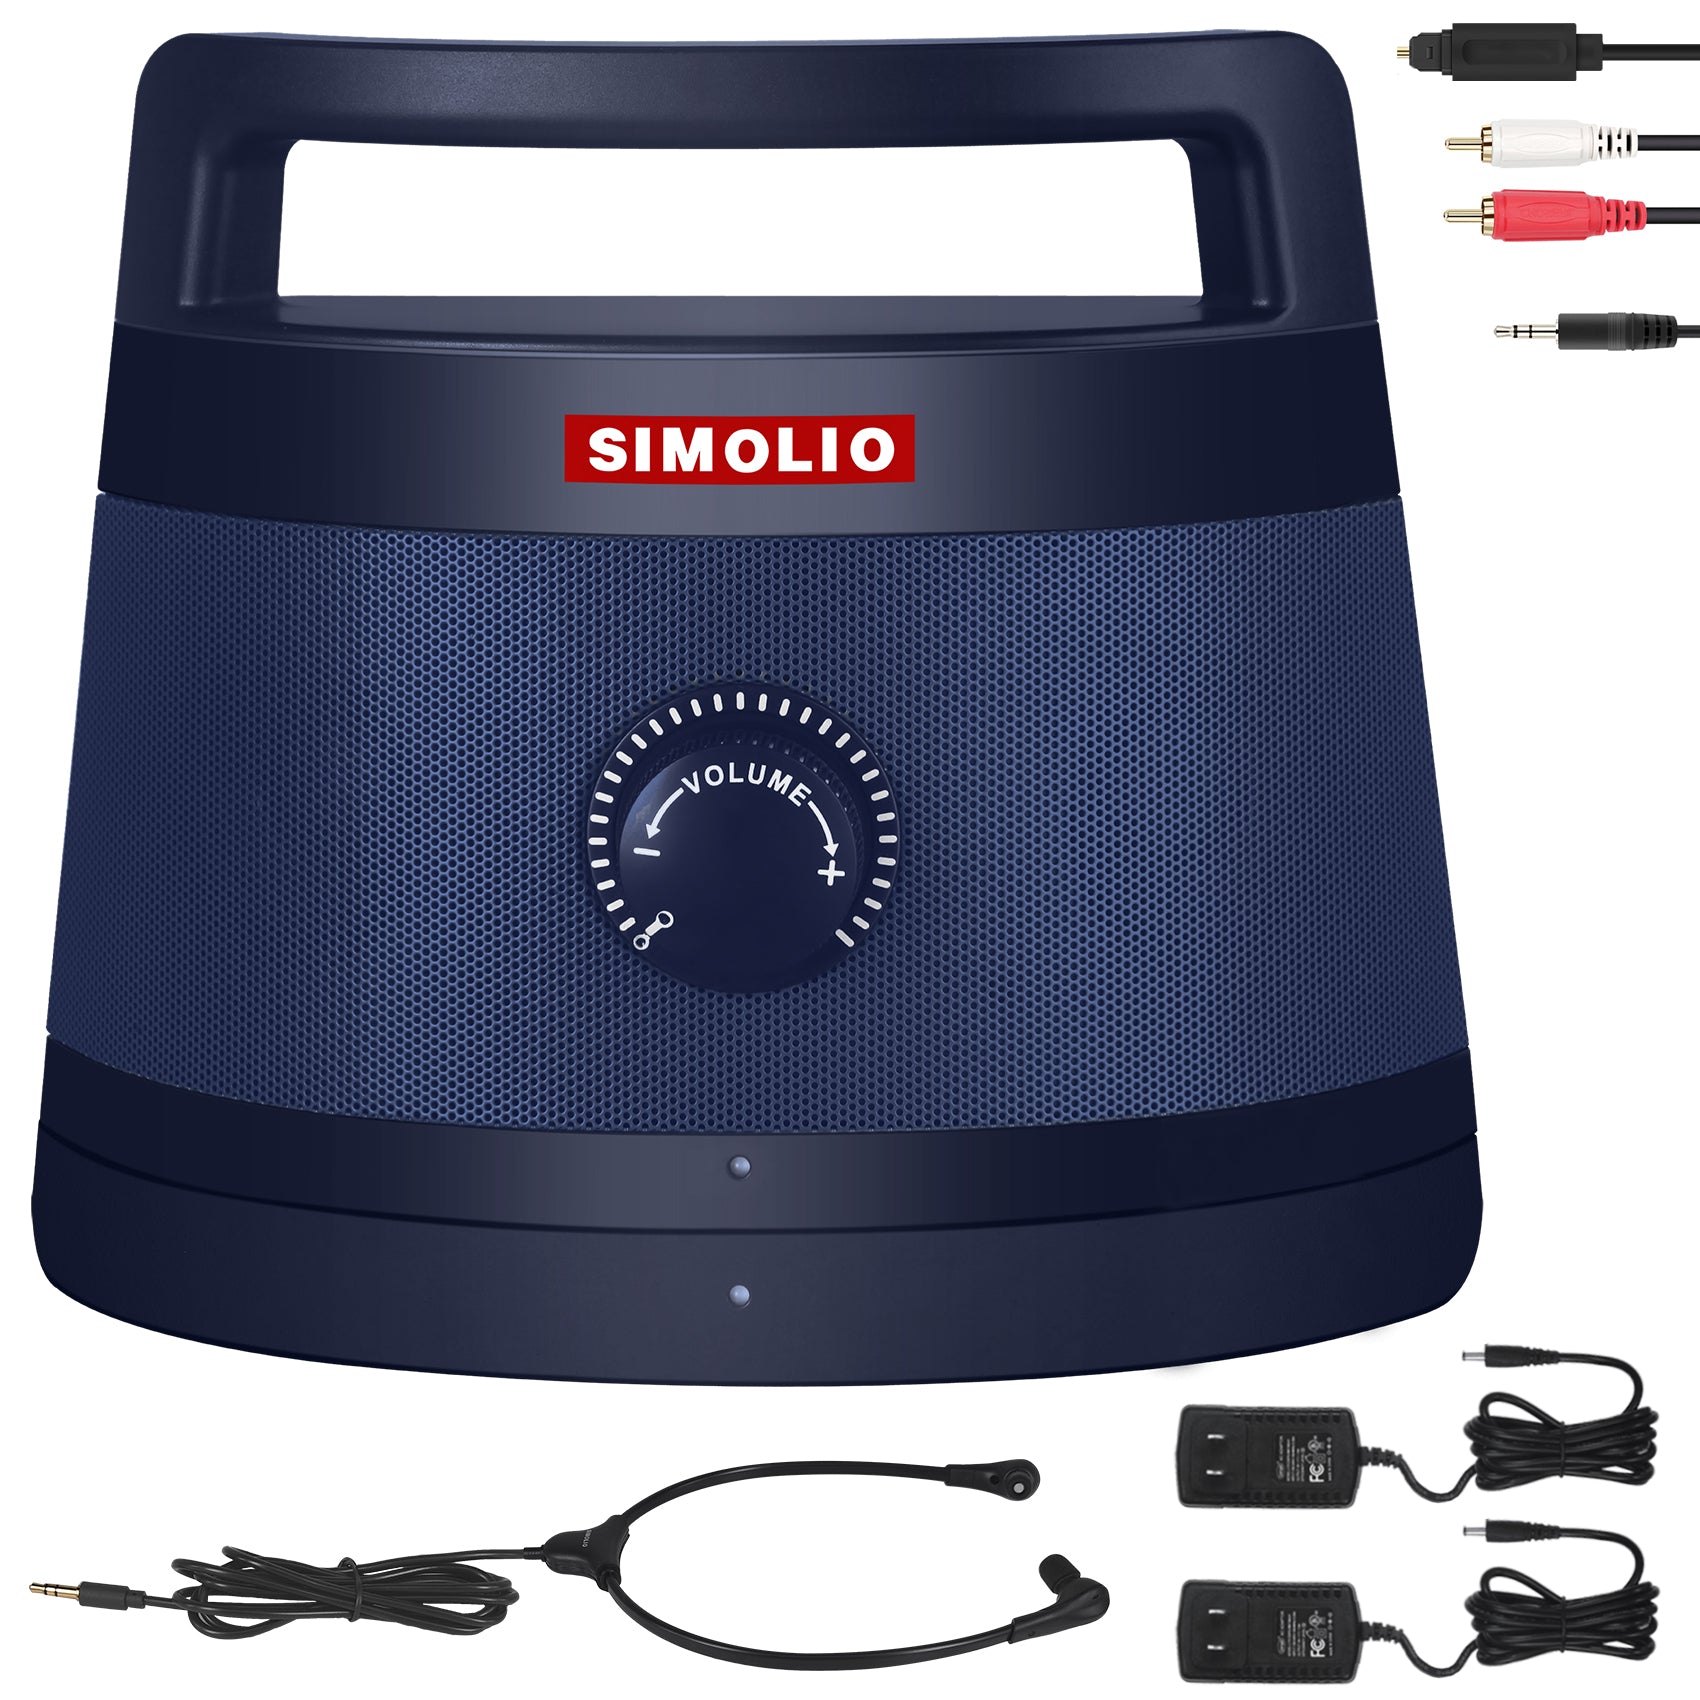 SIMOLIO SM-621D wireless speakers for tv listening elderly hard of hearing